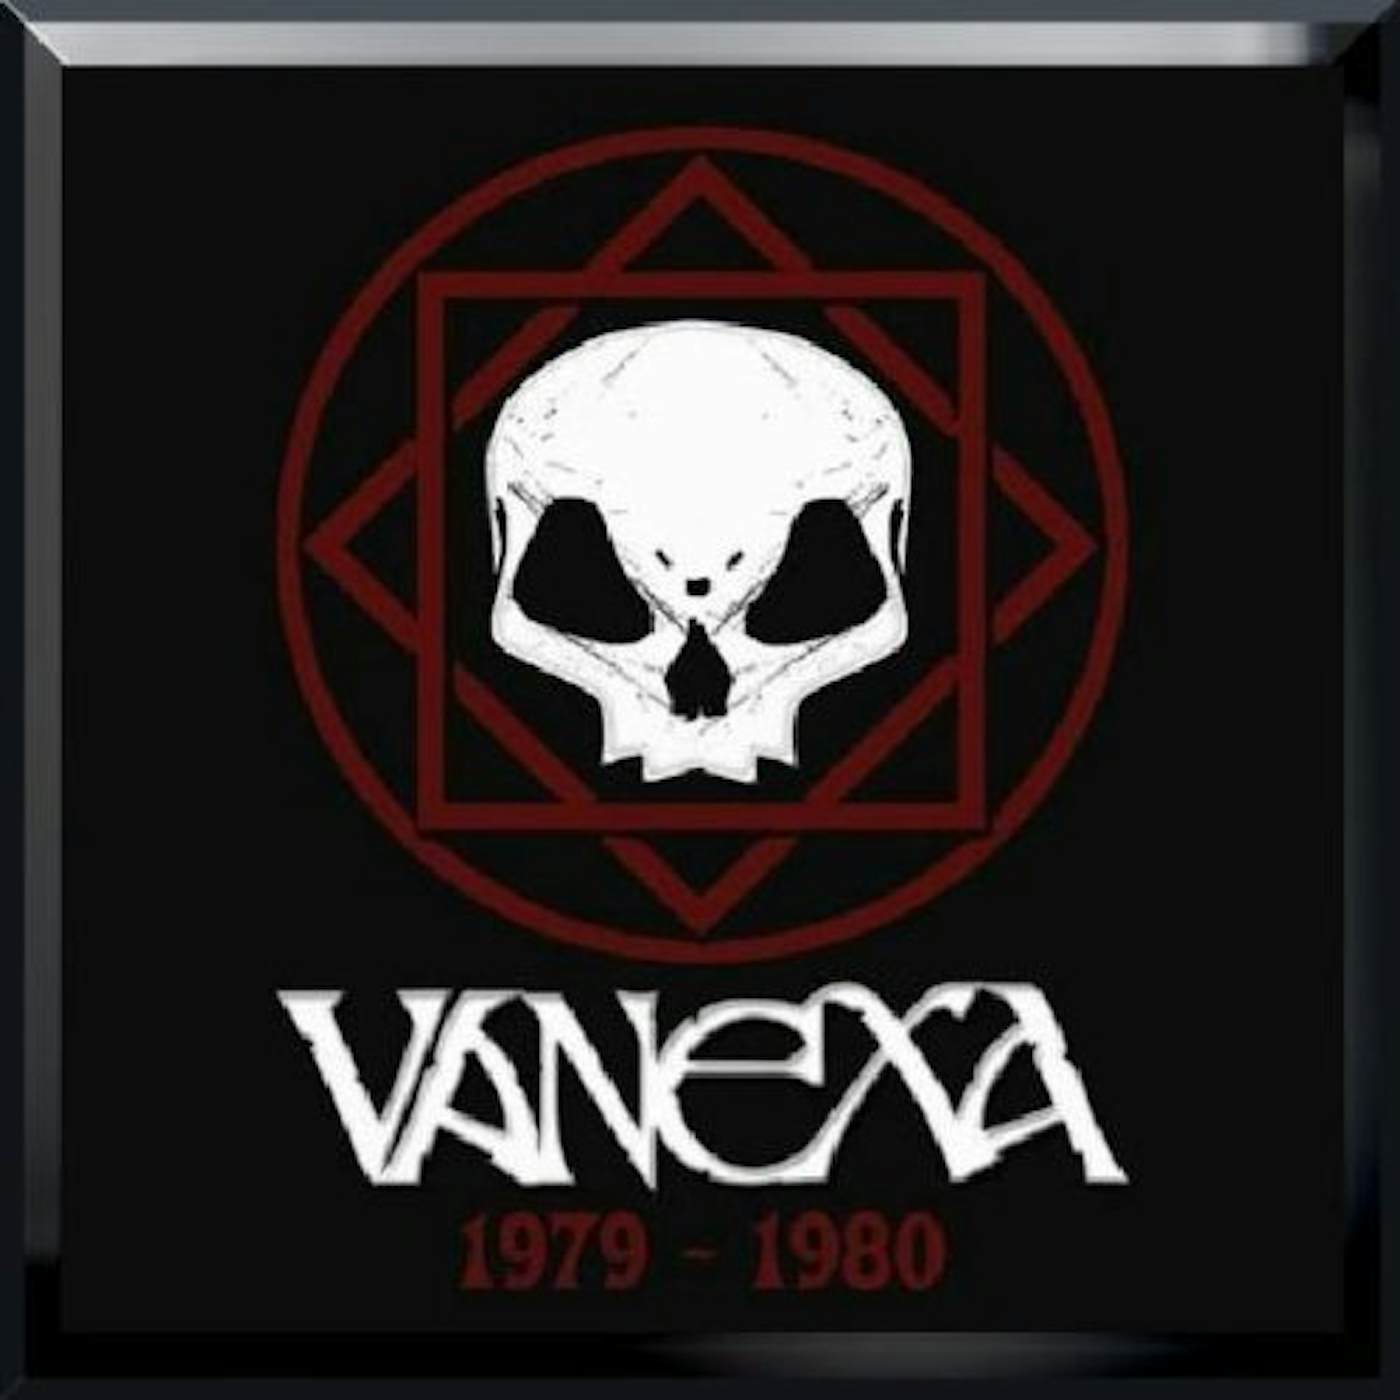 VANEXA 1979-80 Vinyl Record